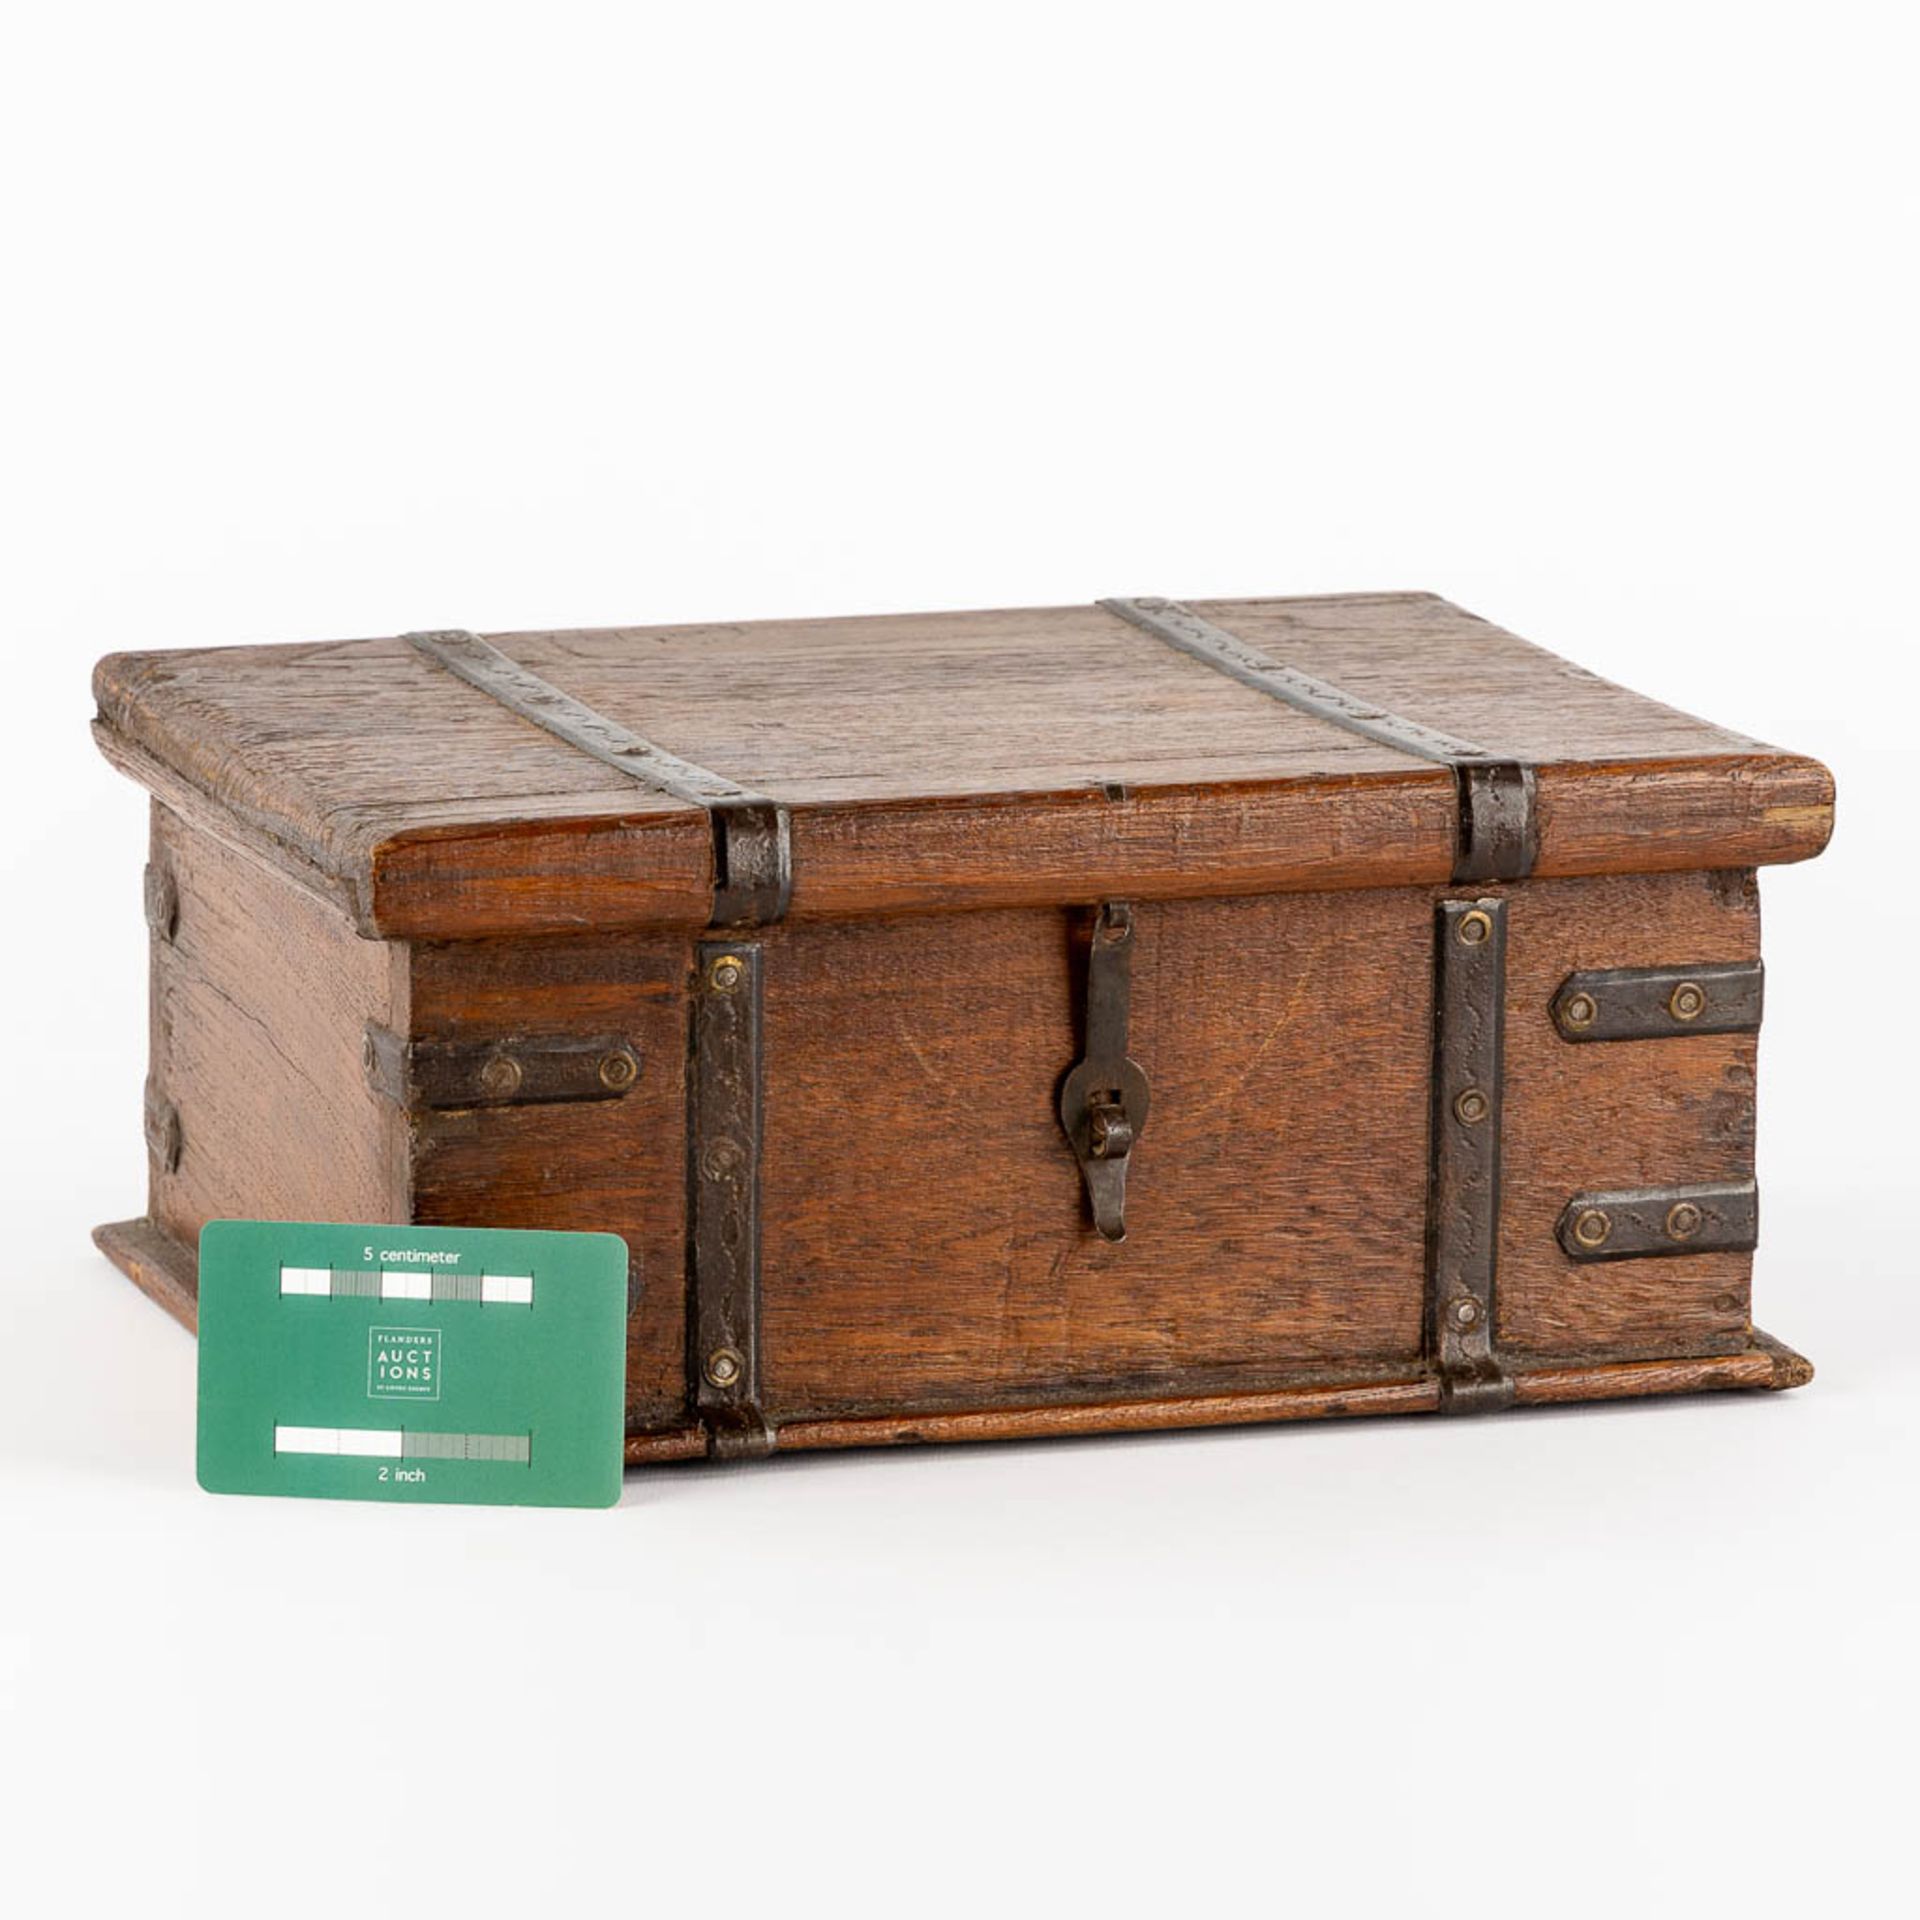 An antique money box or storage chest, oak and wrought iron, 19th C. (L:23 x W:31 x H:13 cm) - Bild 2 aus 13